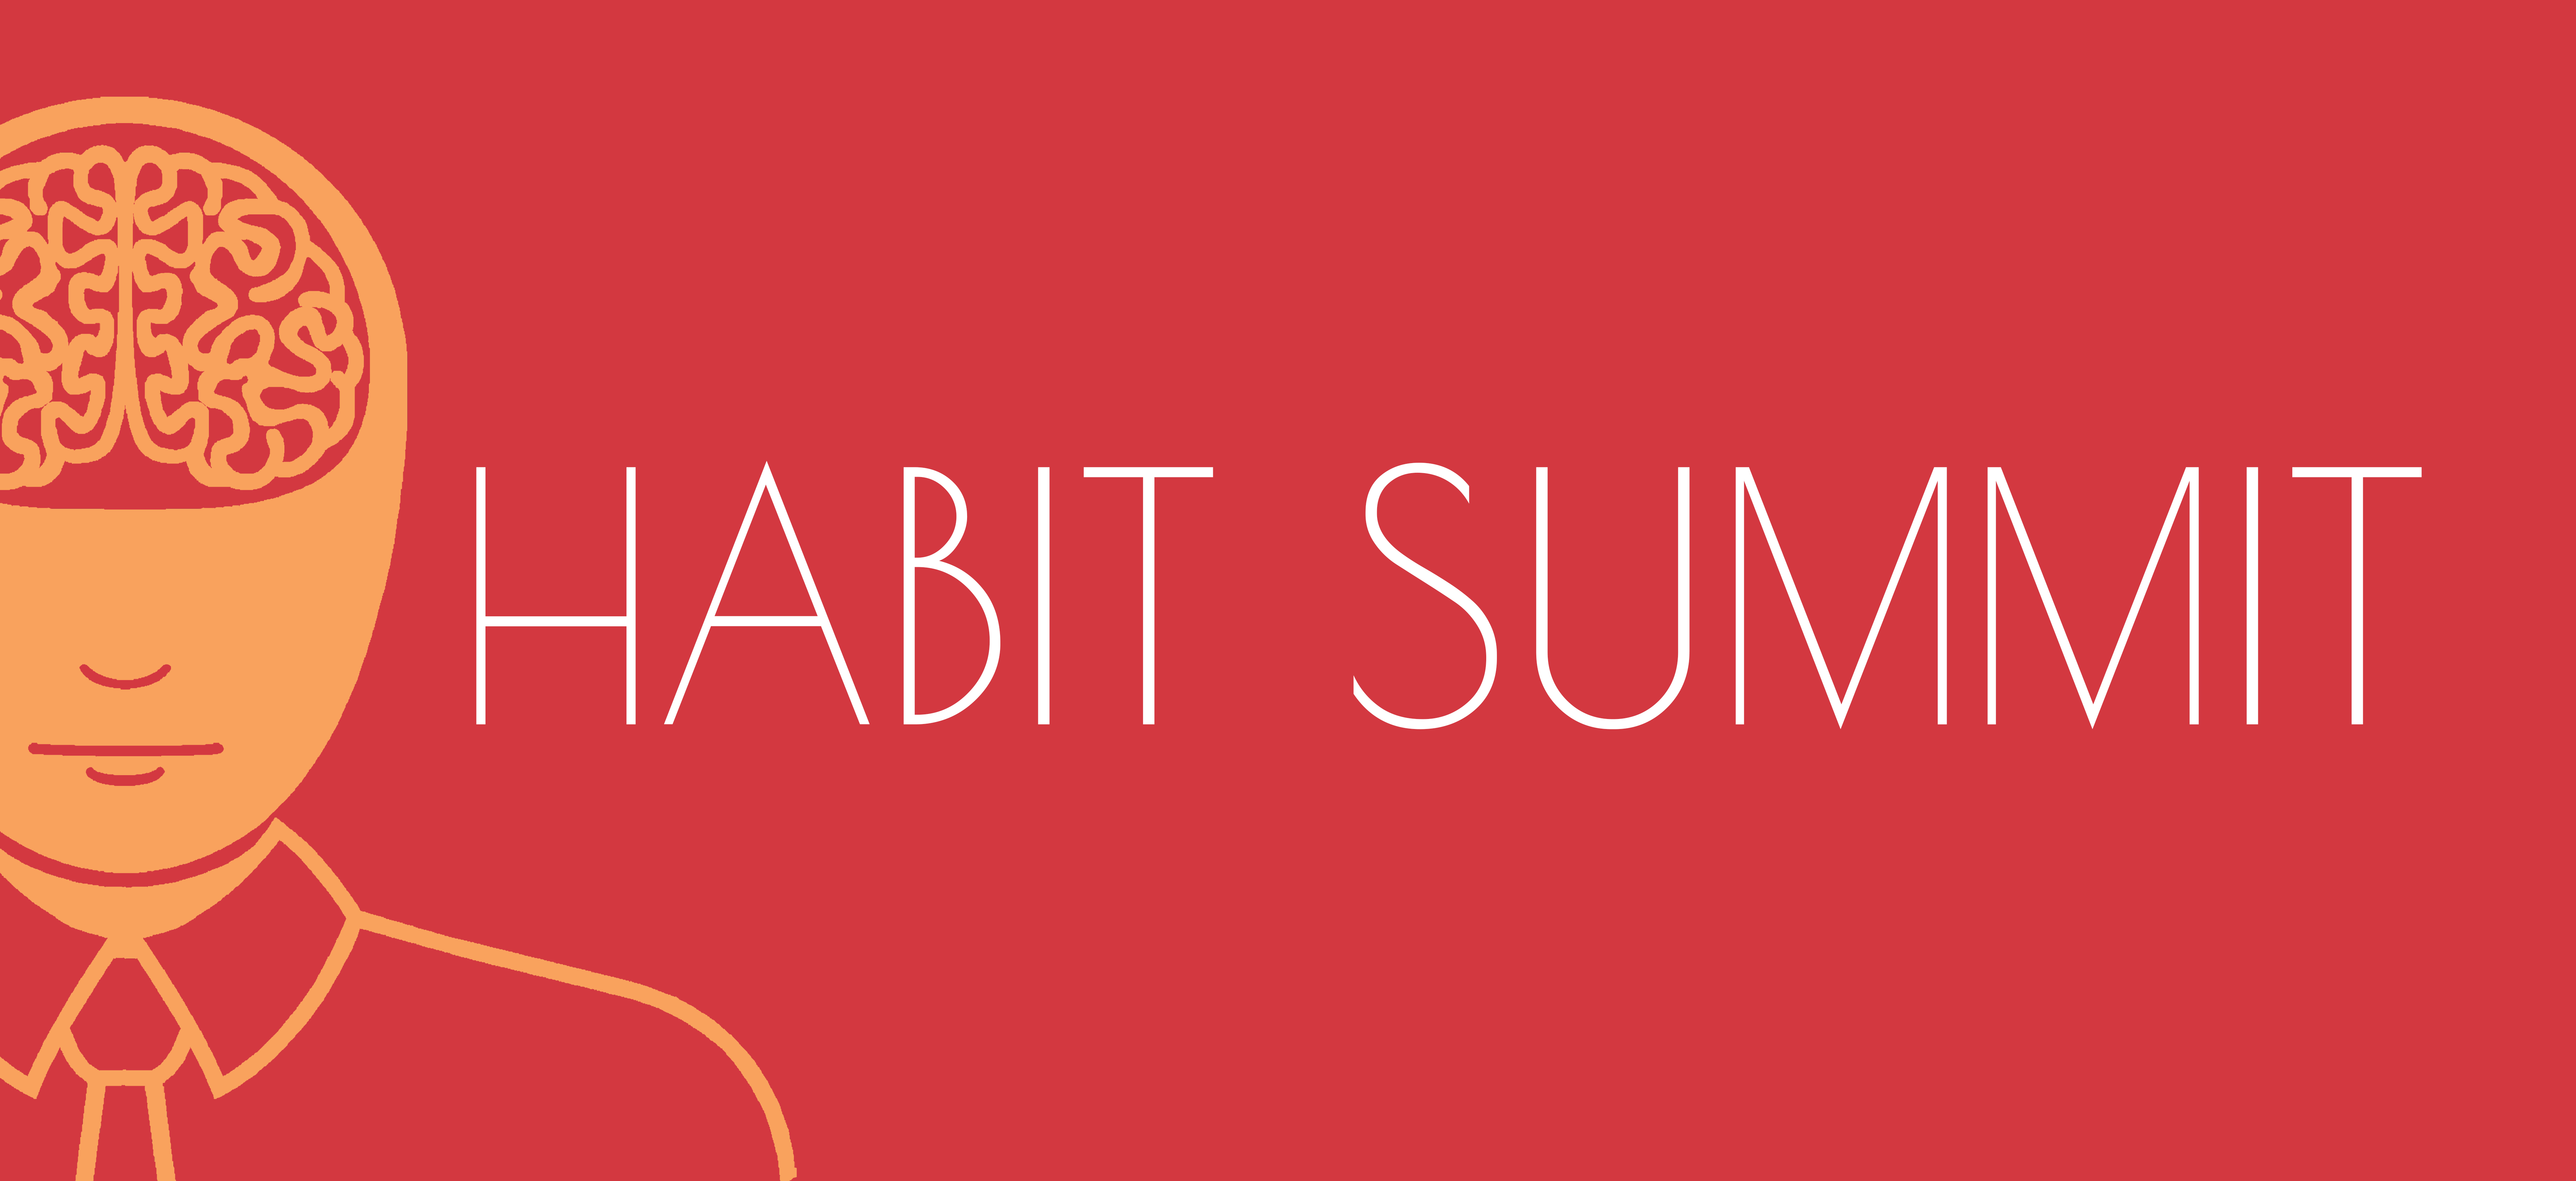 Behavioral Design Conference | Habit Summit San Francisco